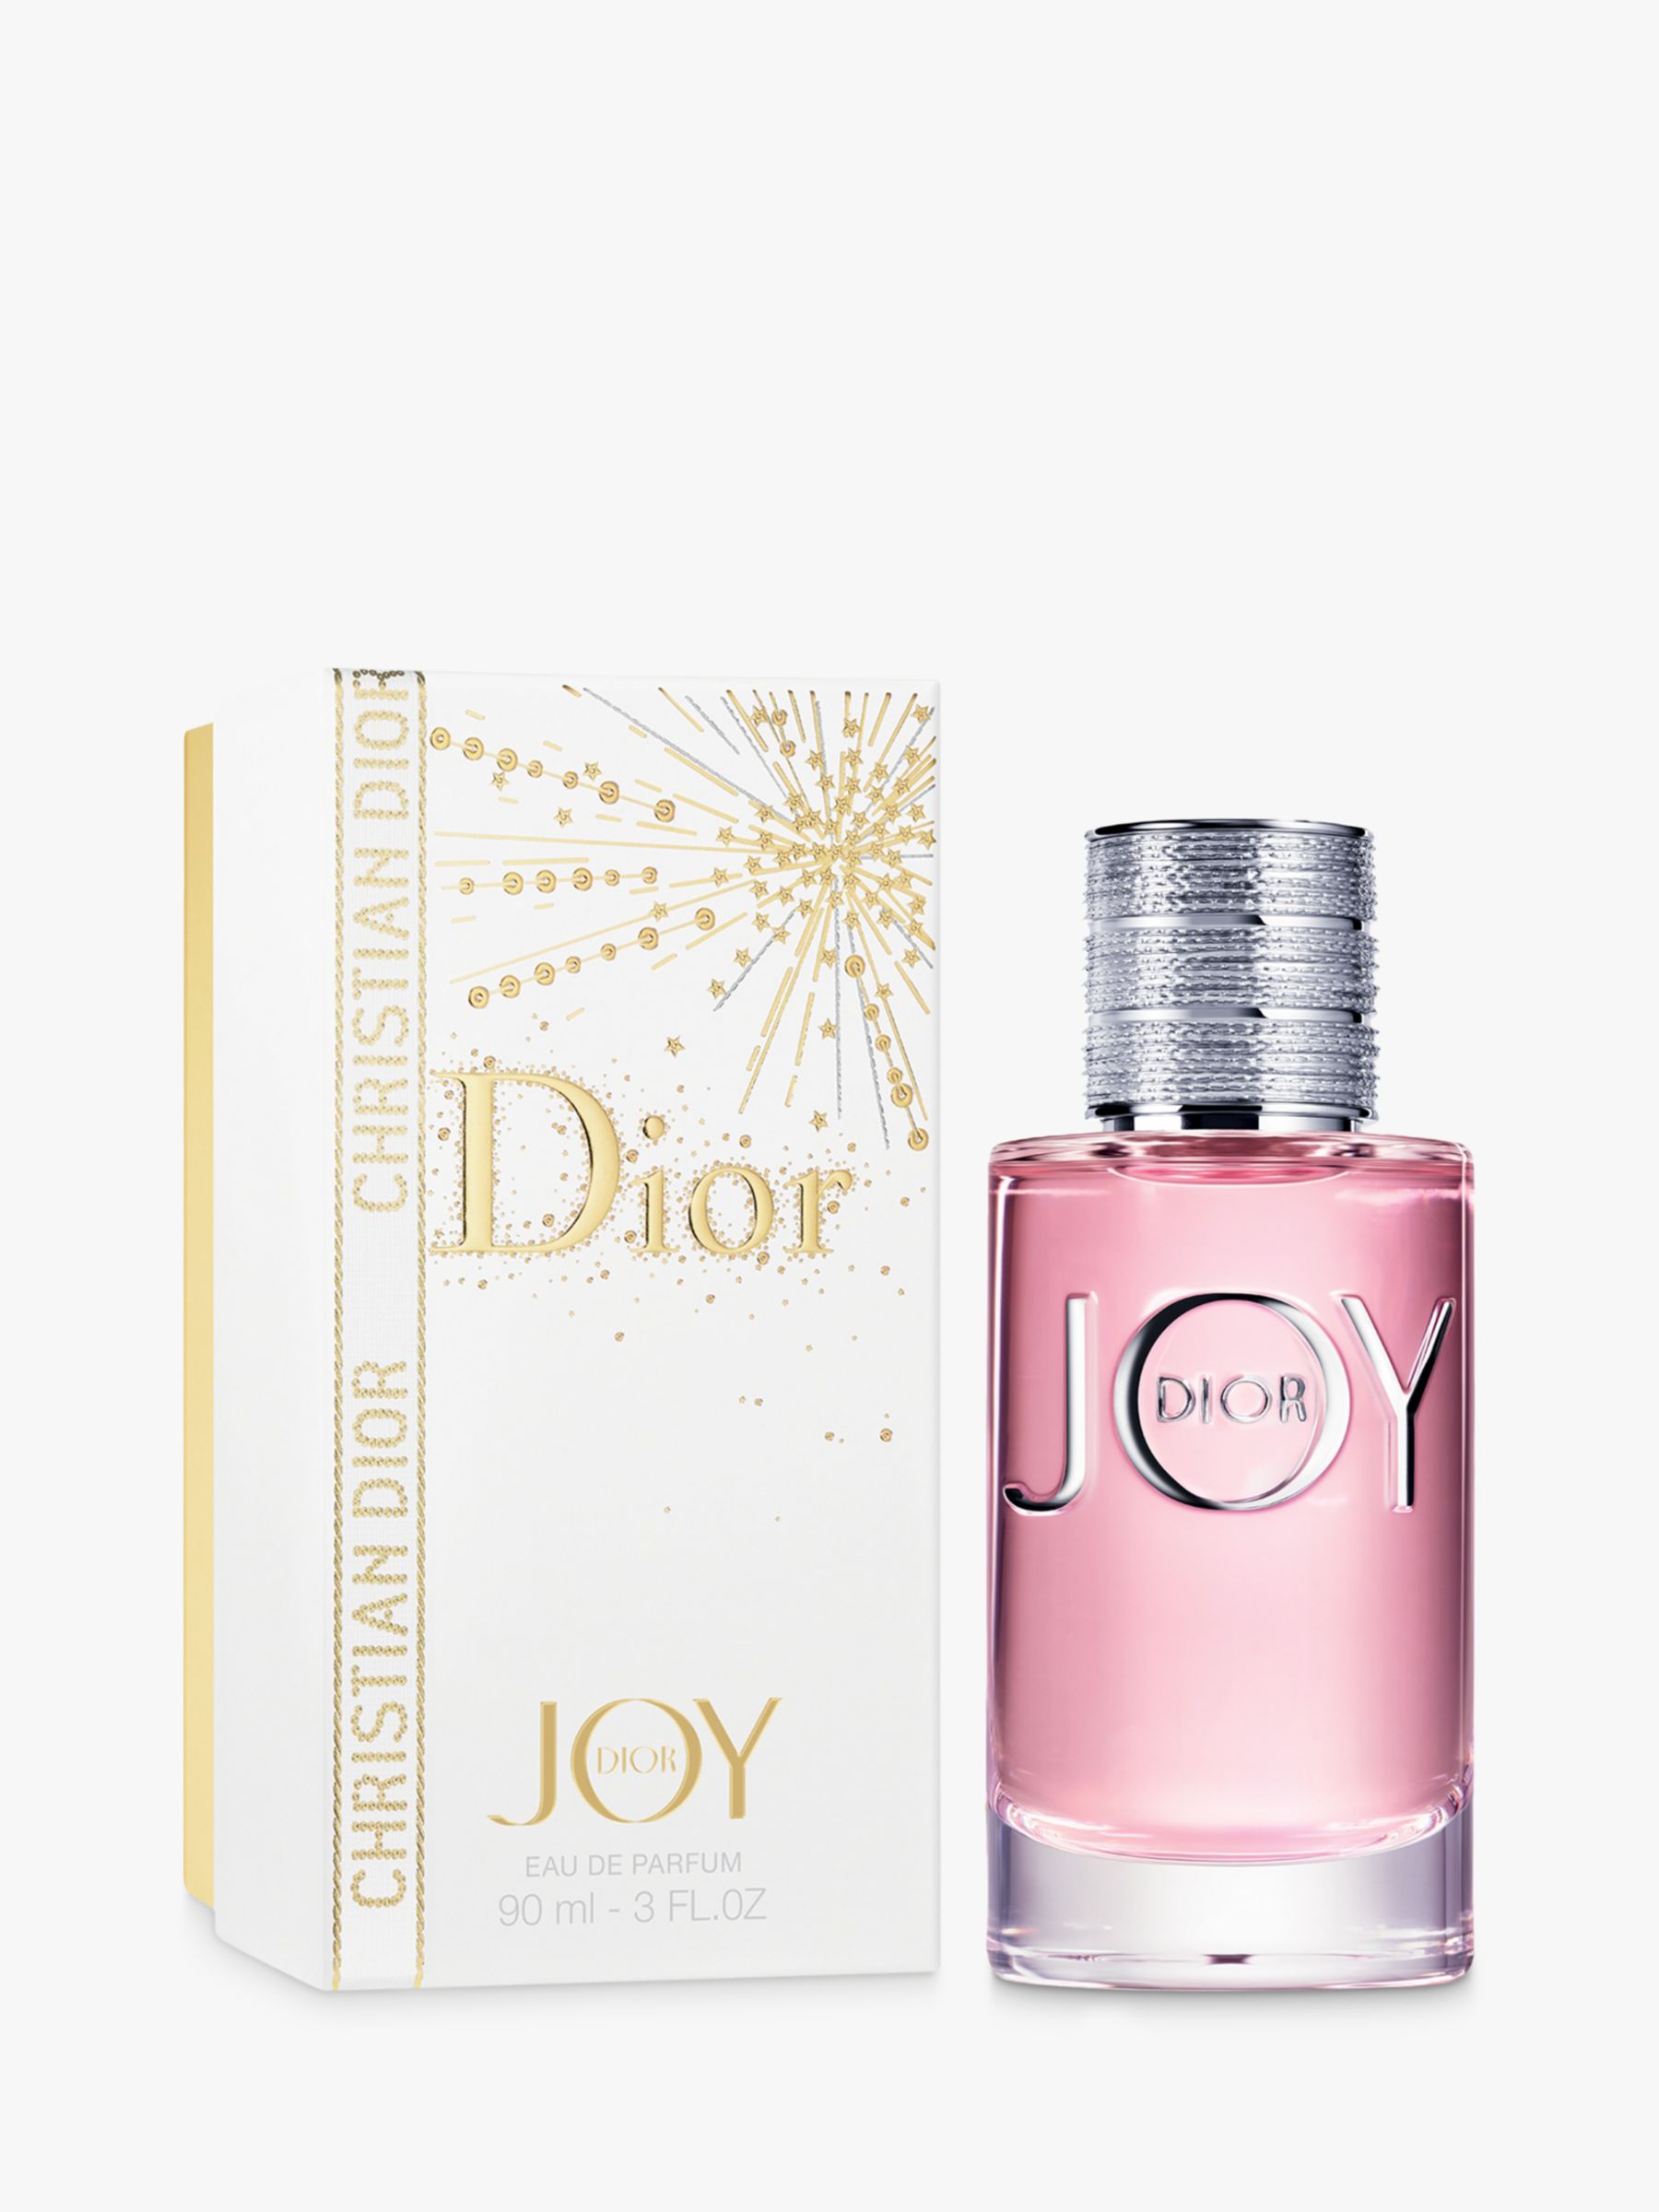 dior joy perfume 90ml price